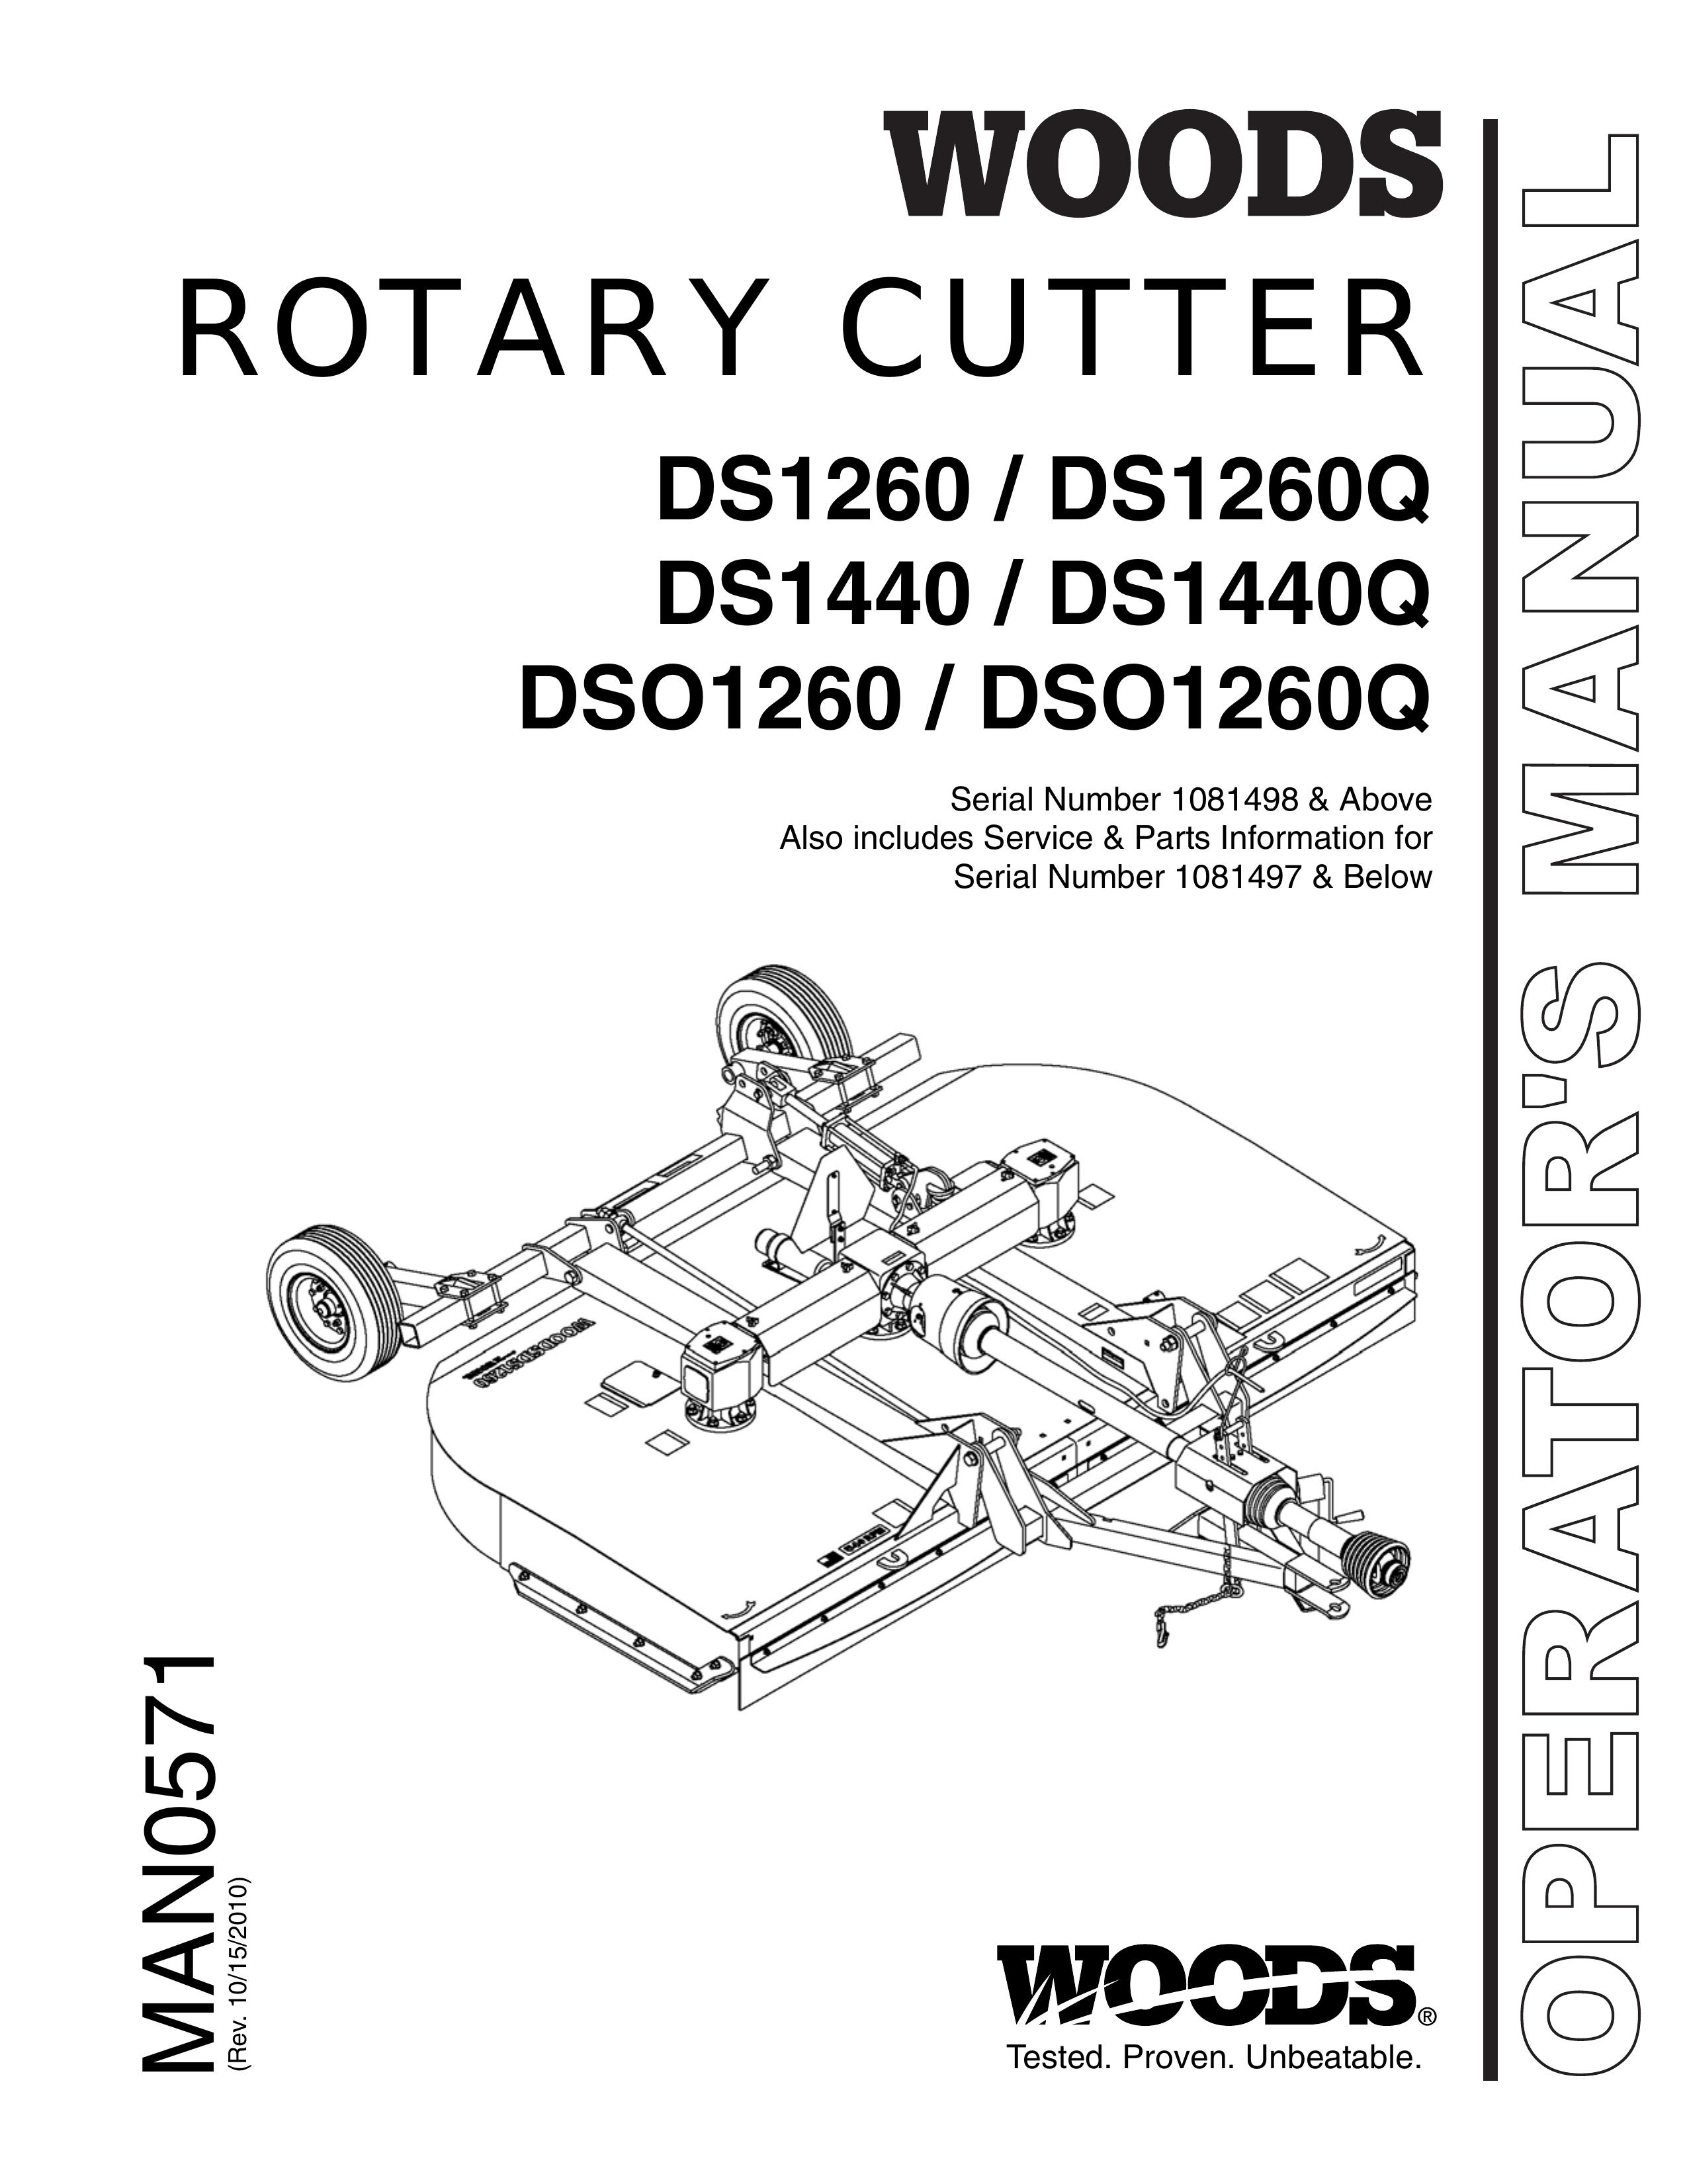 Woods Equipment DS1260Q Brush Cutter User Manual